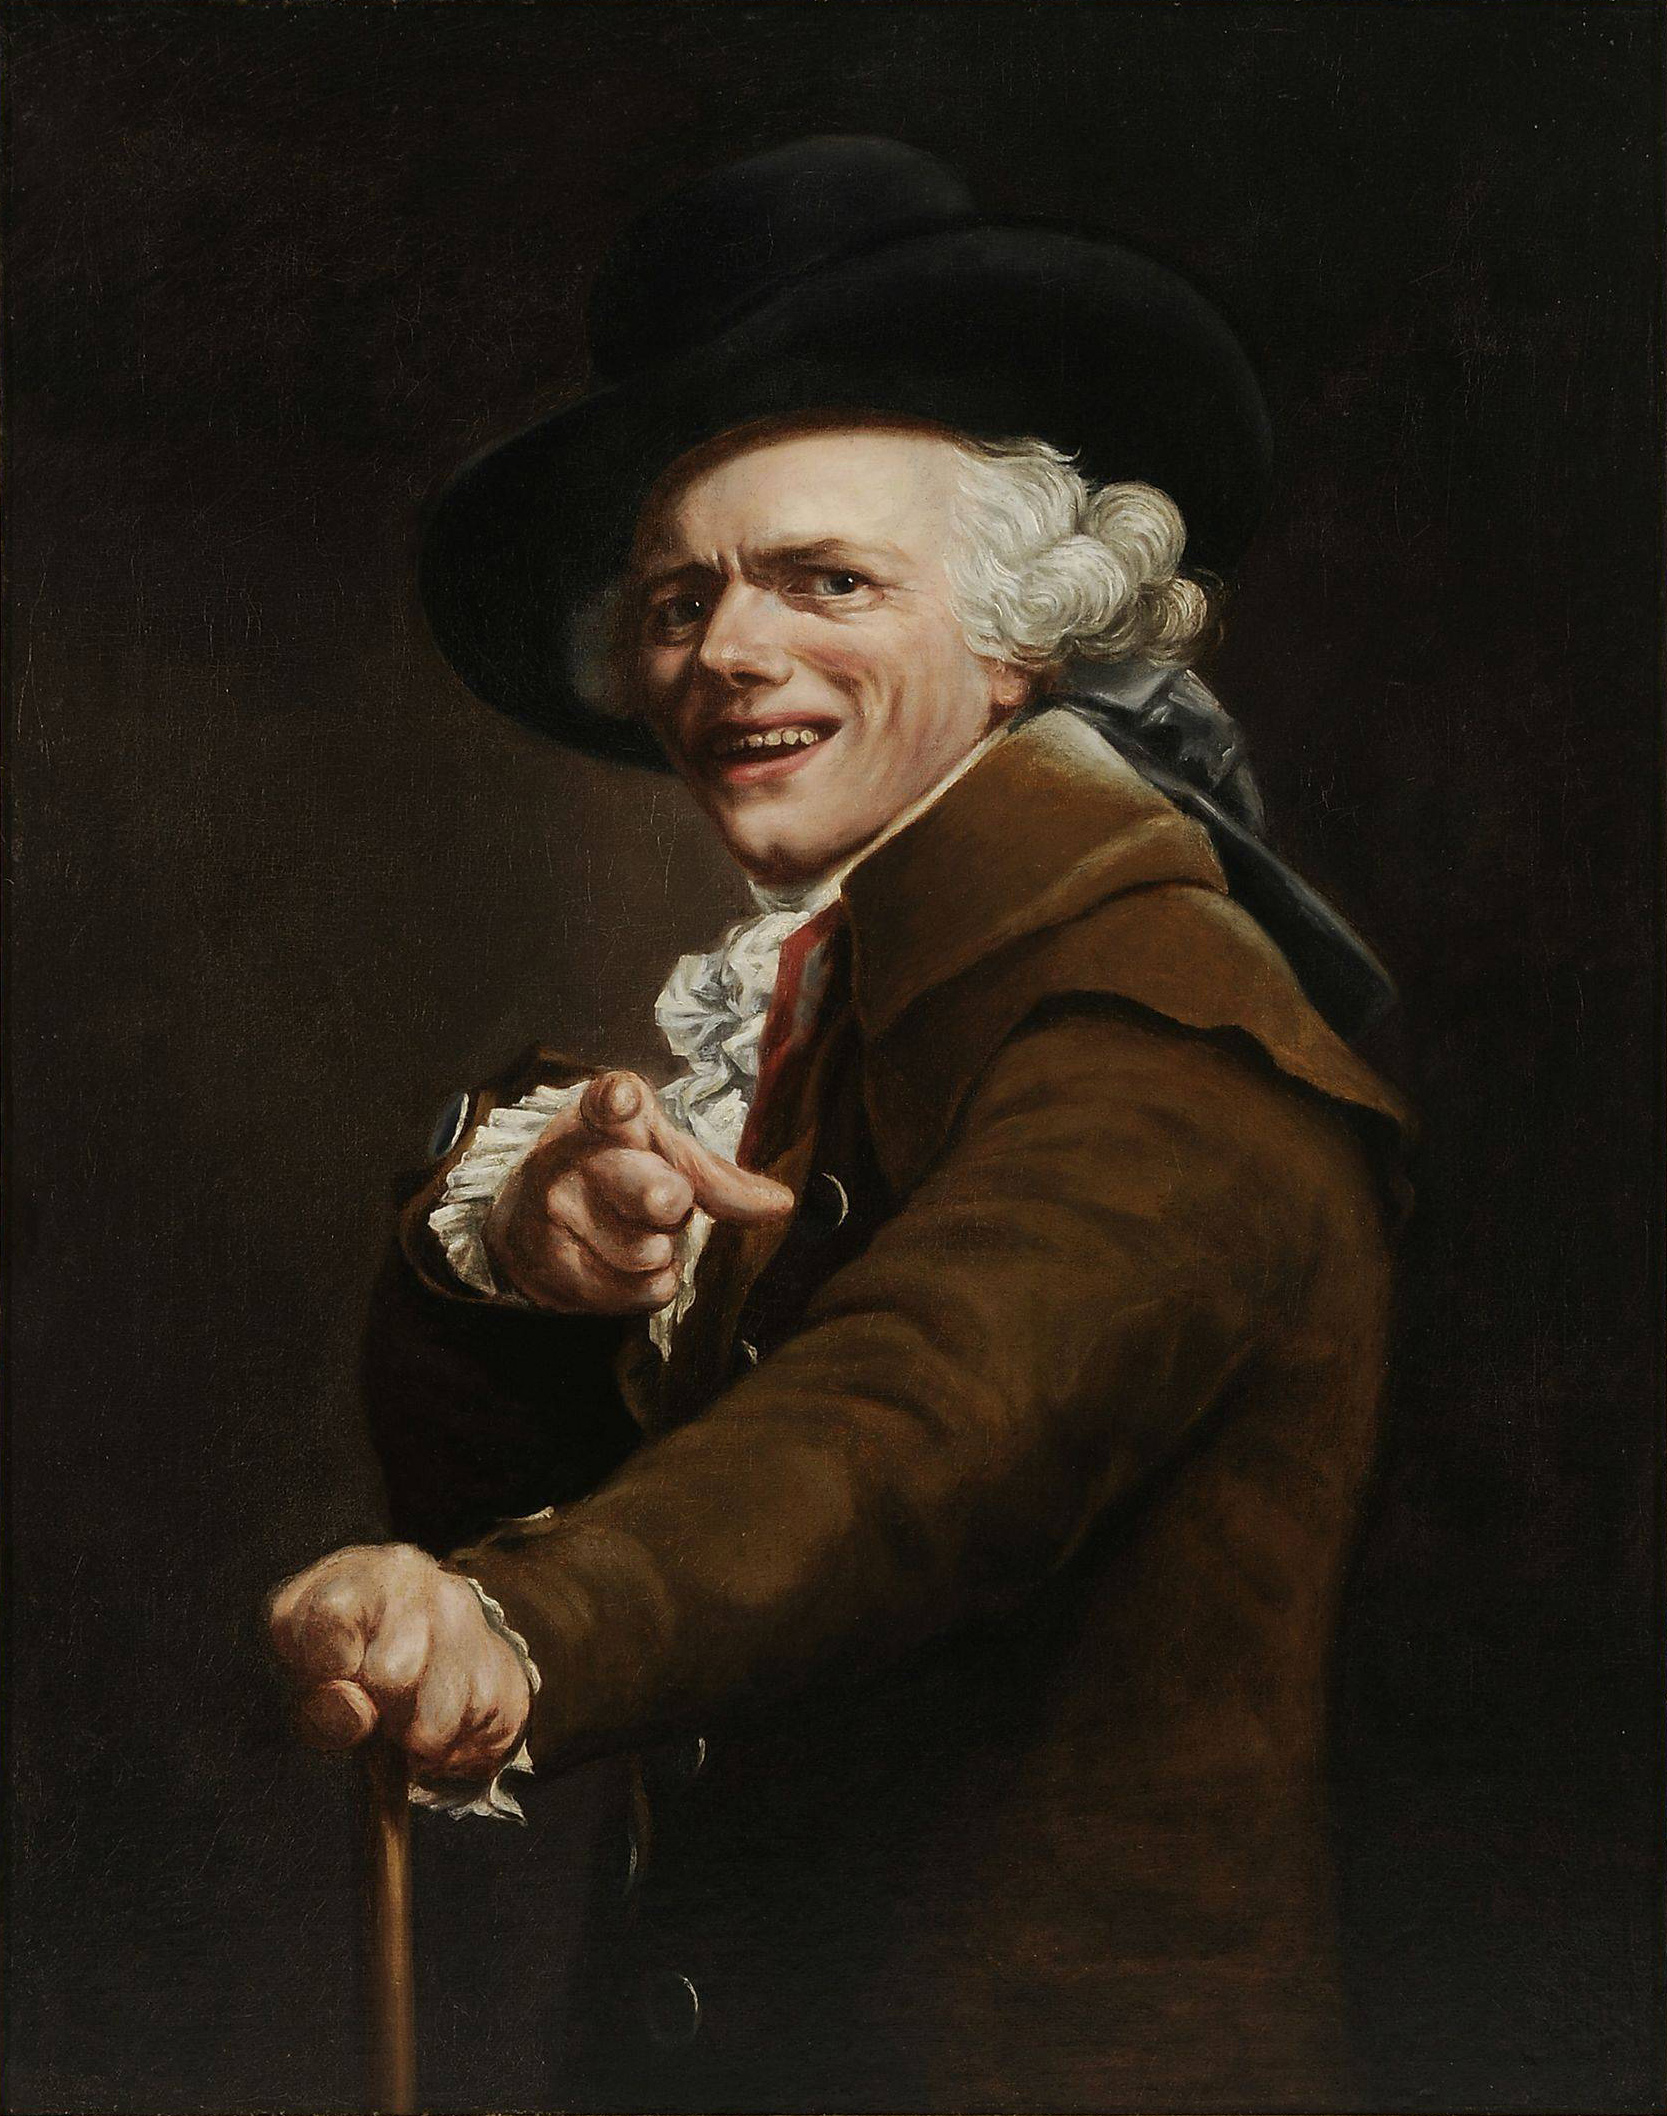 Self-portrait of the artist in the guise of a mocker by Joseph Ducreux - 1791 - 91 × 72 cm Musée du Louvre